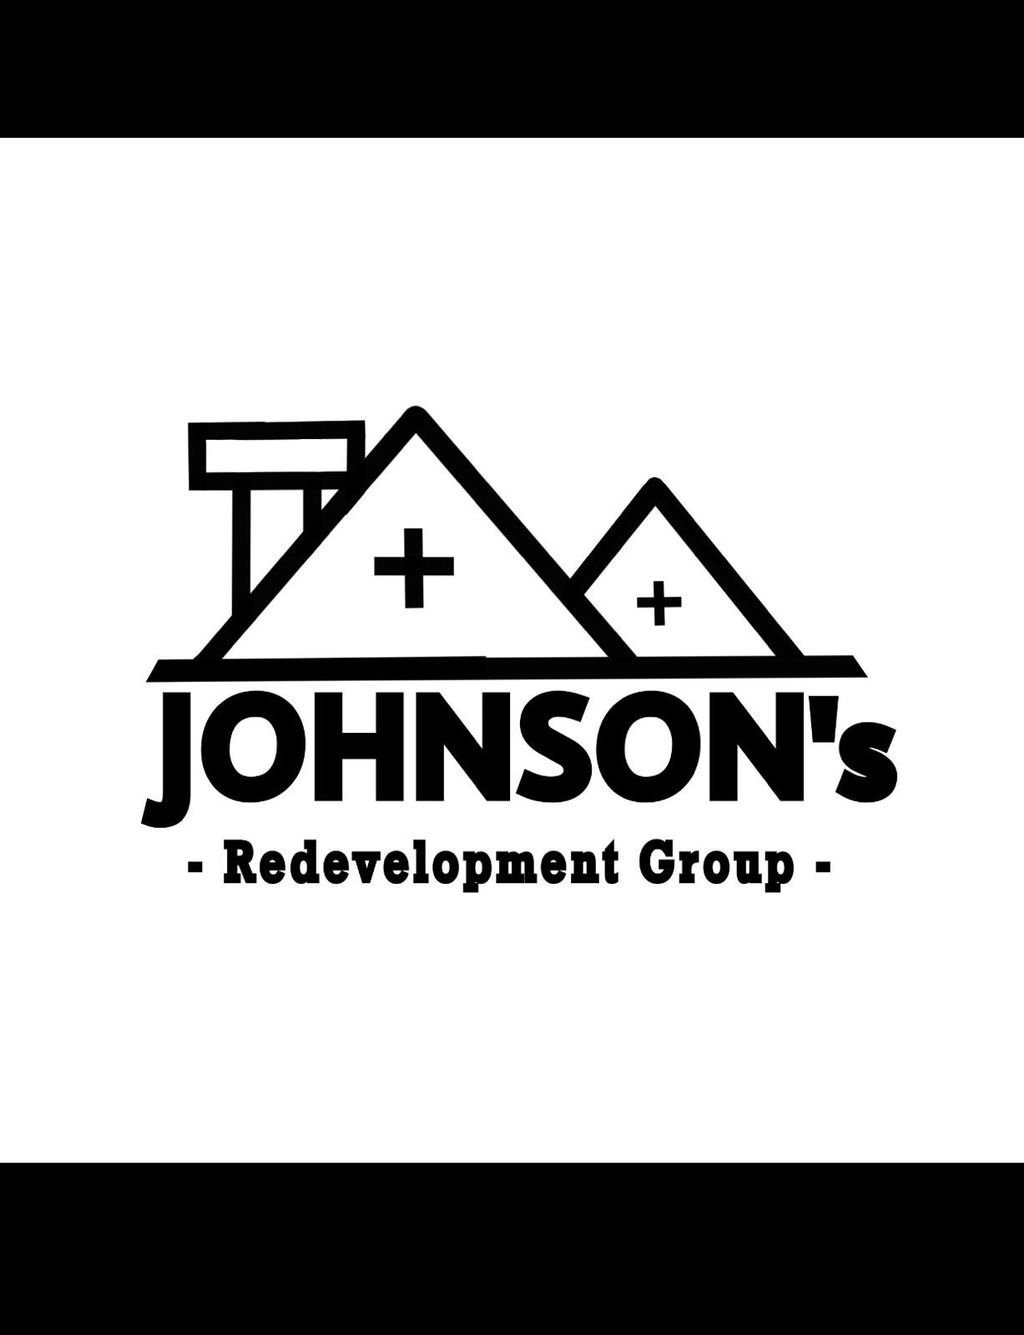 Johnson’s Redevelopment Group